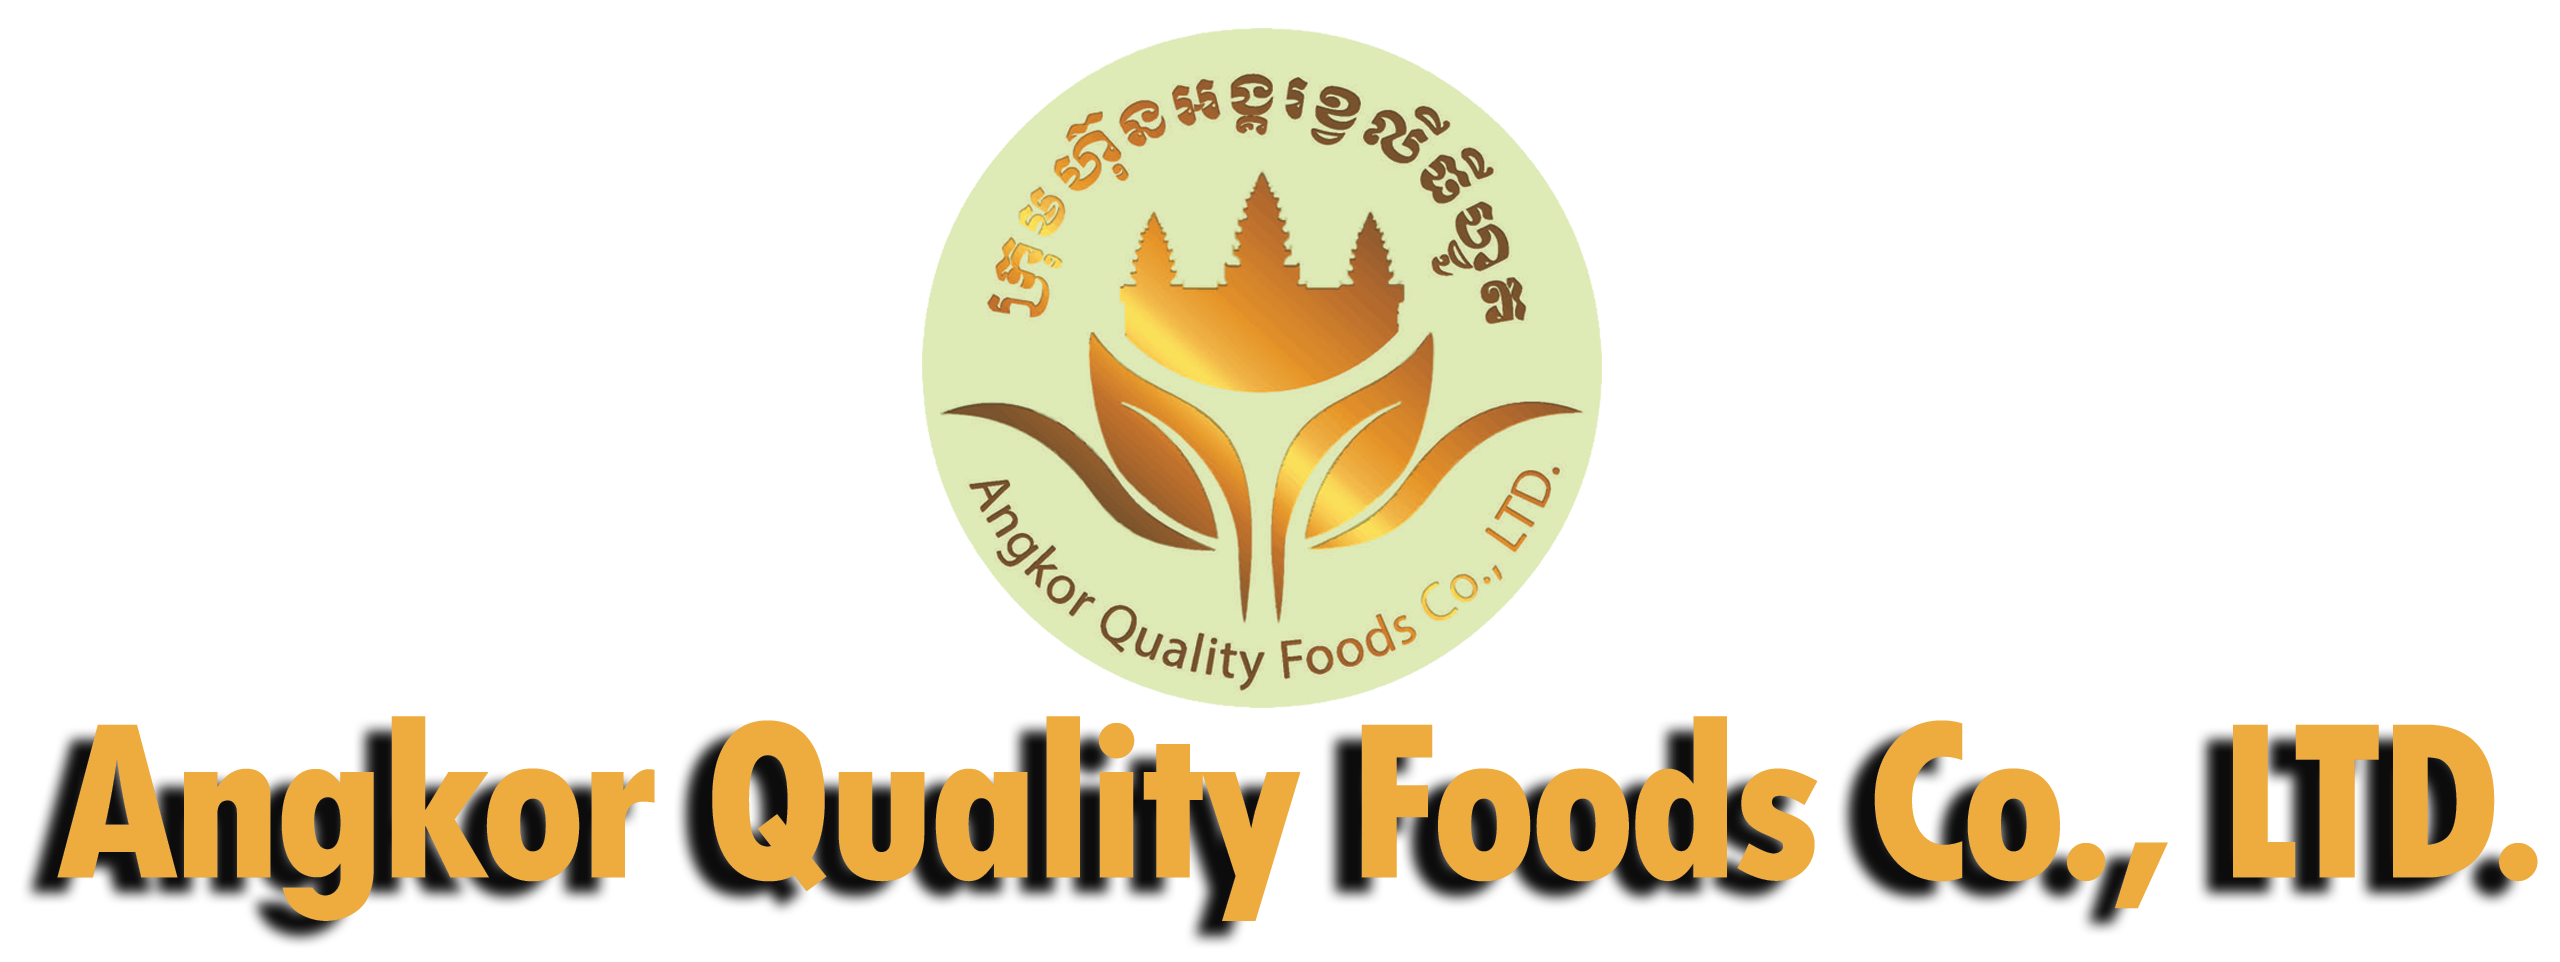 Angkor Quality Foods